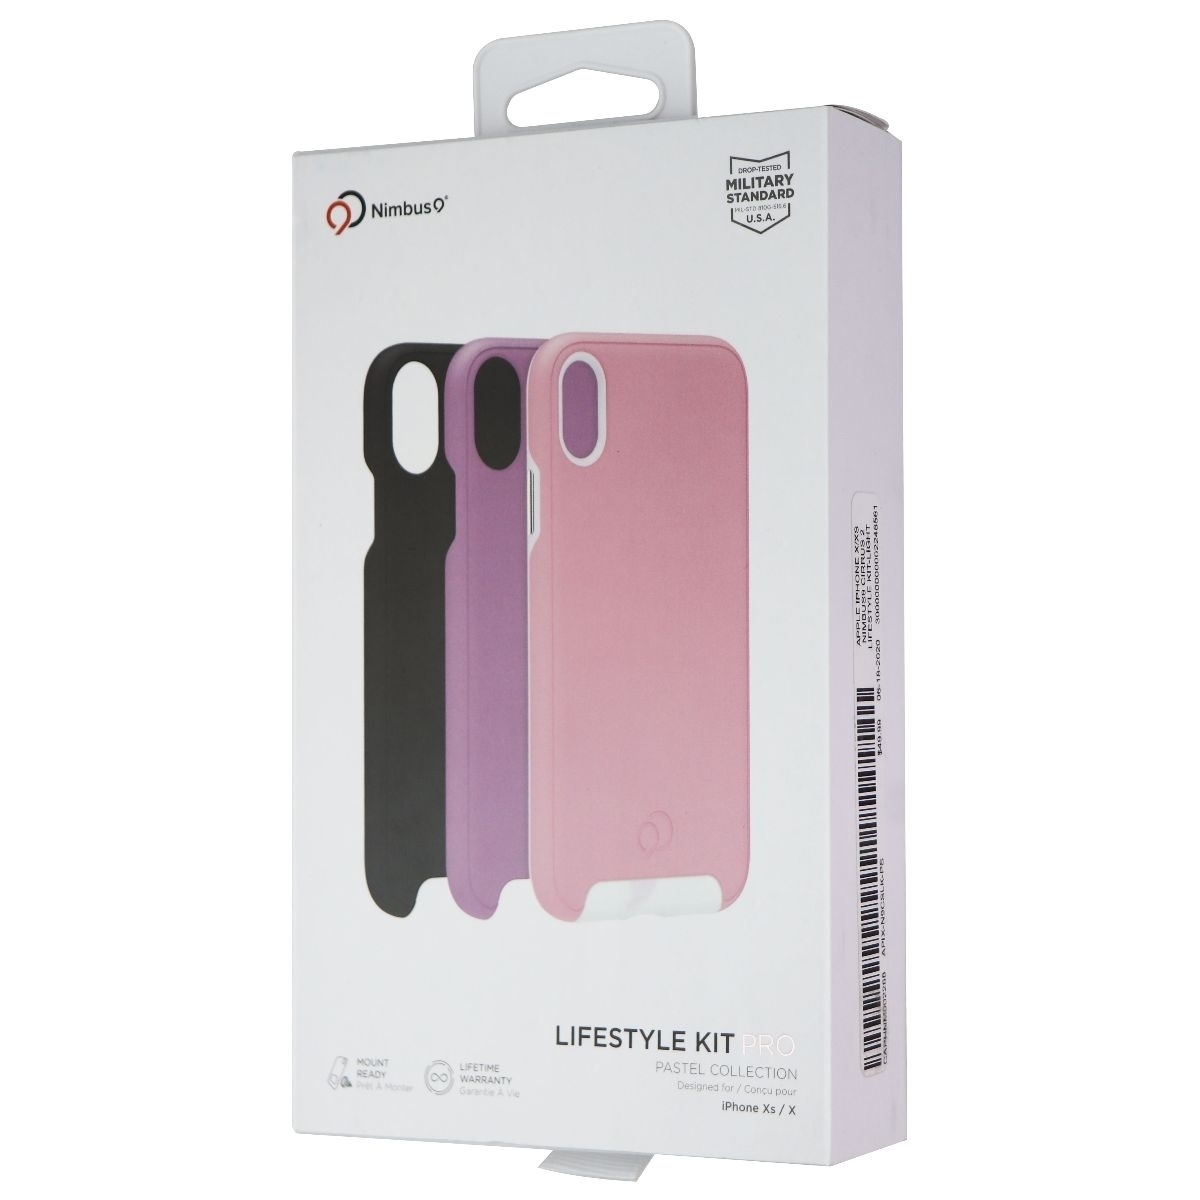 Nimbus9 Lifestyle Kit Pro Pastel Collection Phone Case For IPhone X / Xs